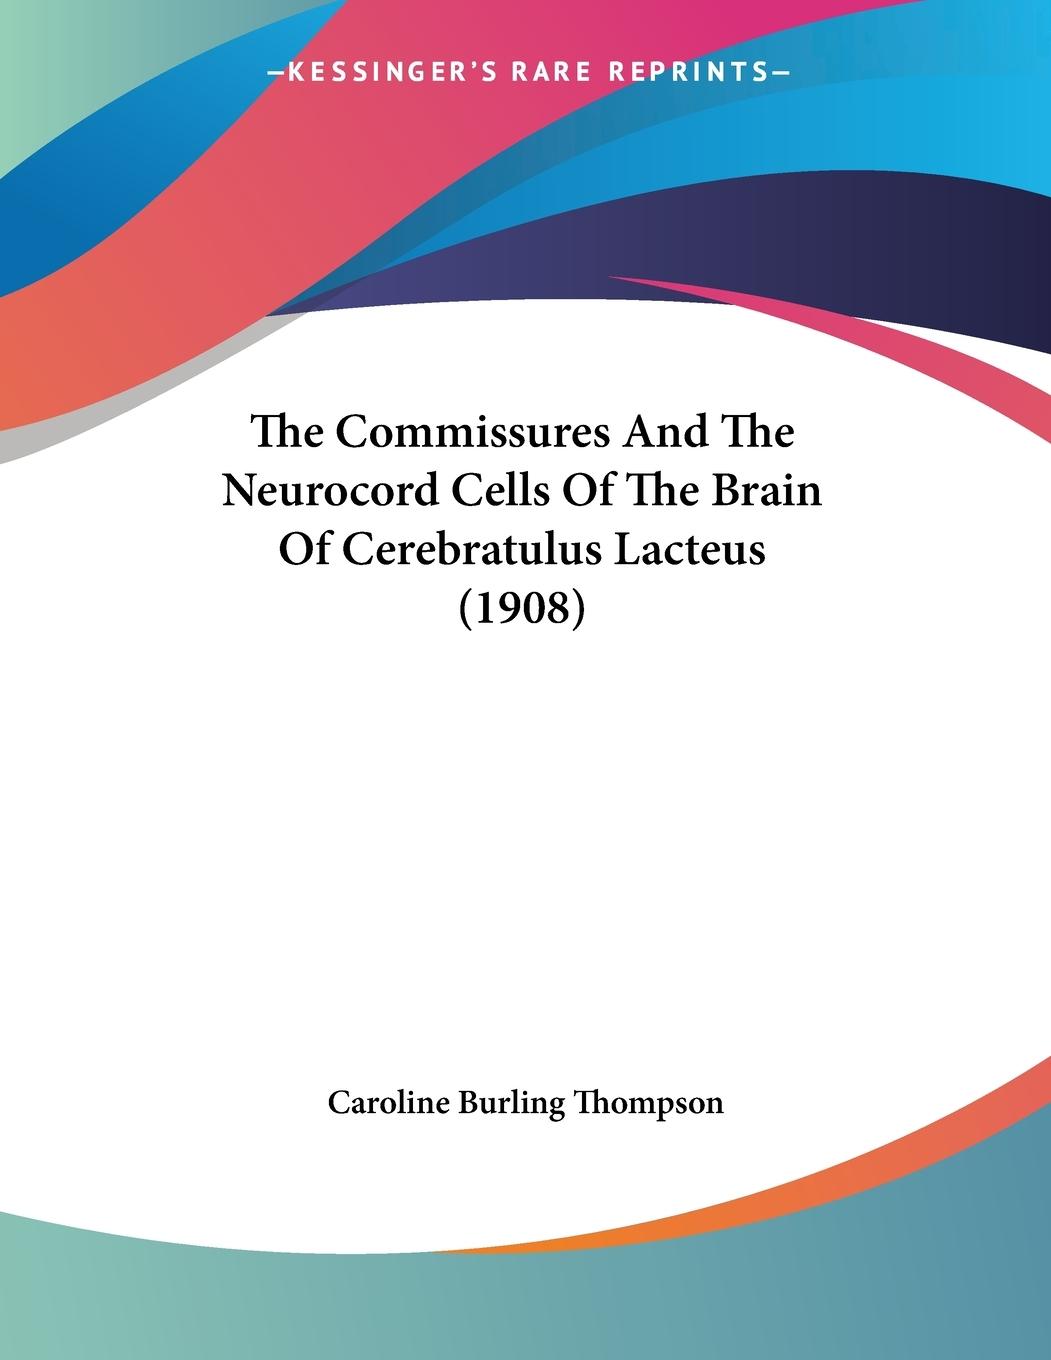 The Commissures And The Neurocord Cells Of The Brain Of Cerebratulus Lacteus (1908) - Thompson, Caroline Burling